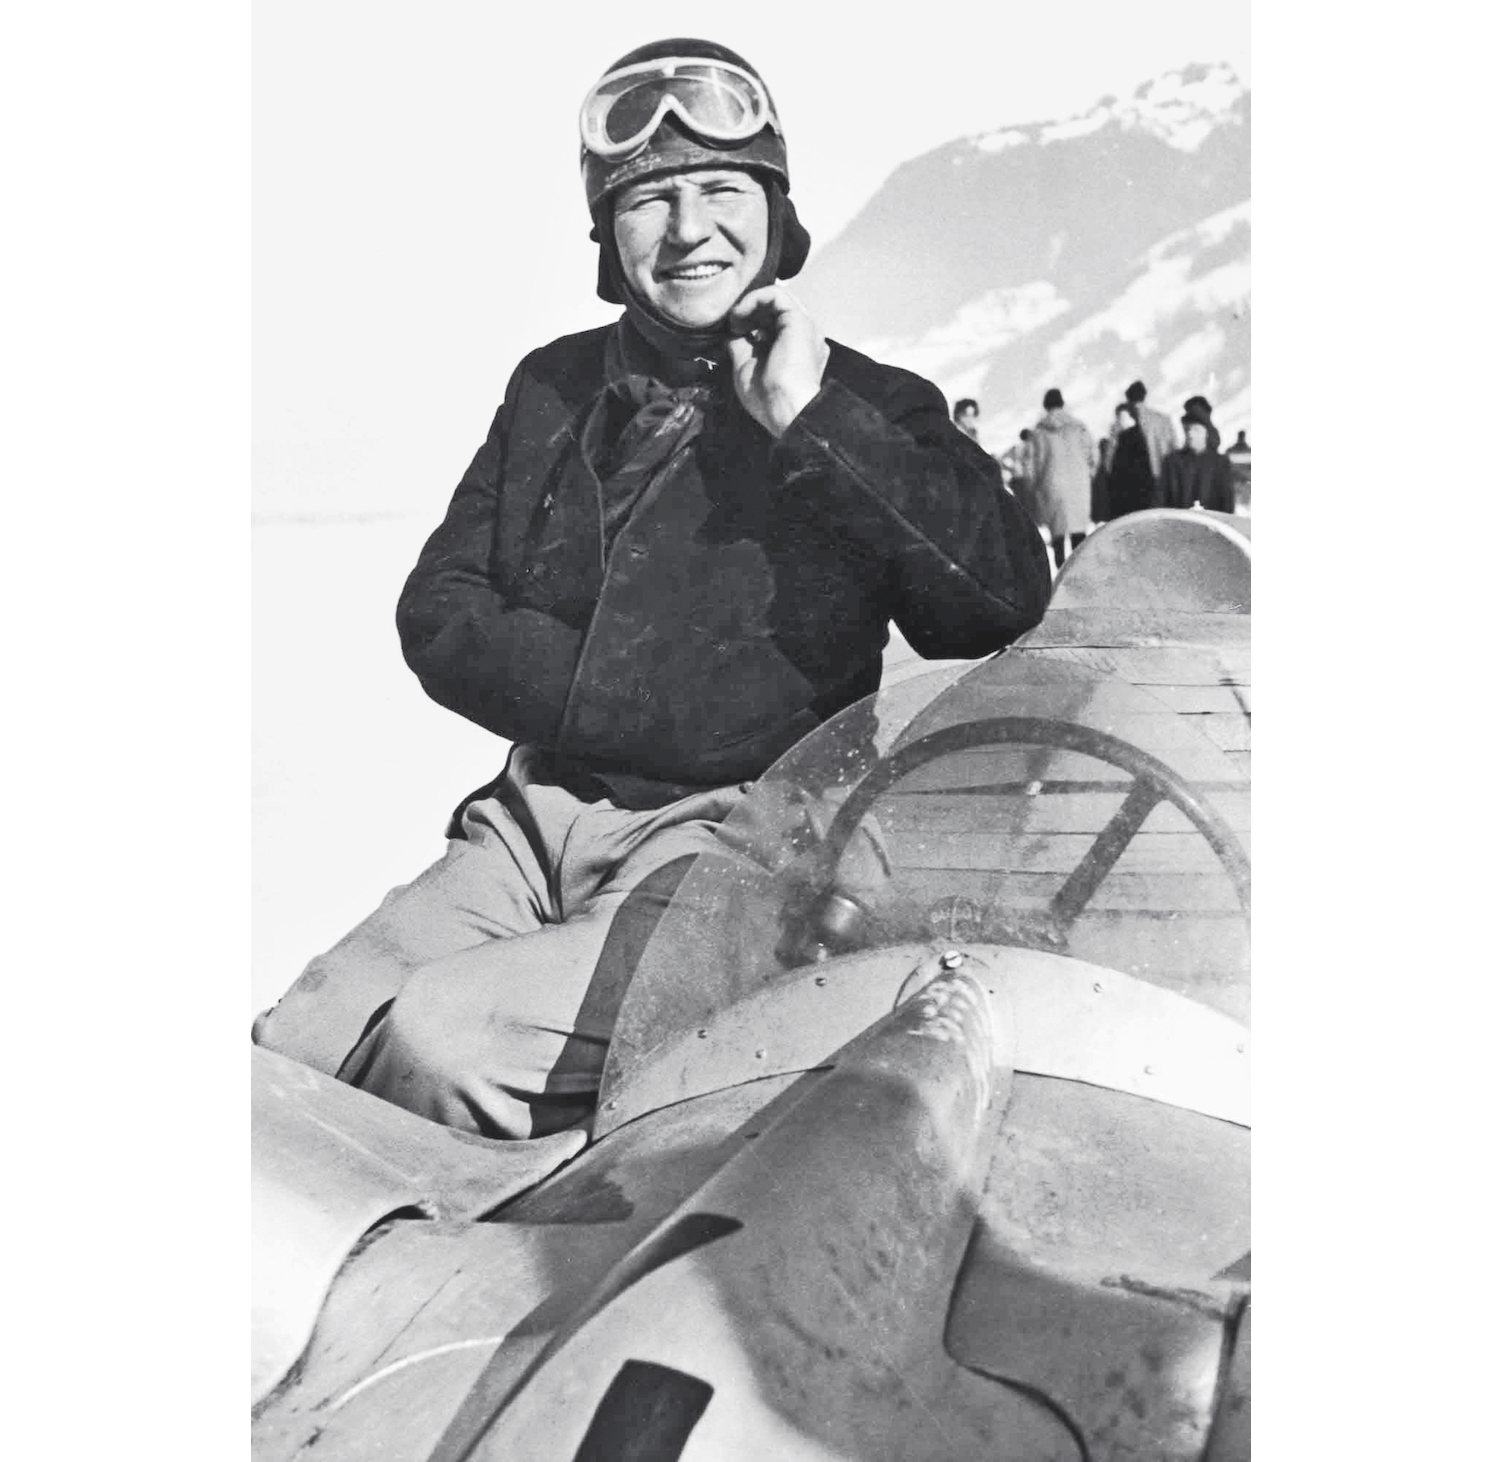 Otto Mathé, “Fetzenflieger“, Ice Race, Lake Zell, Austria, 1955, Porsche AG